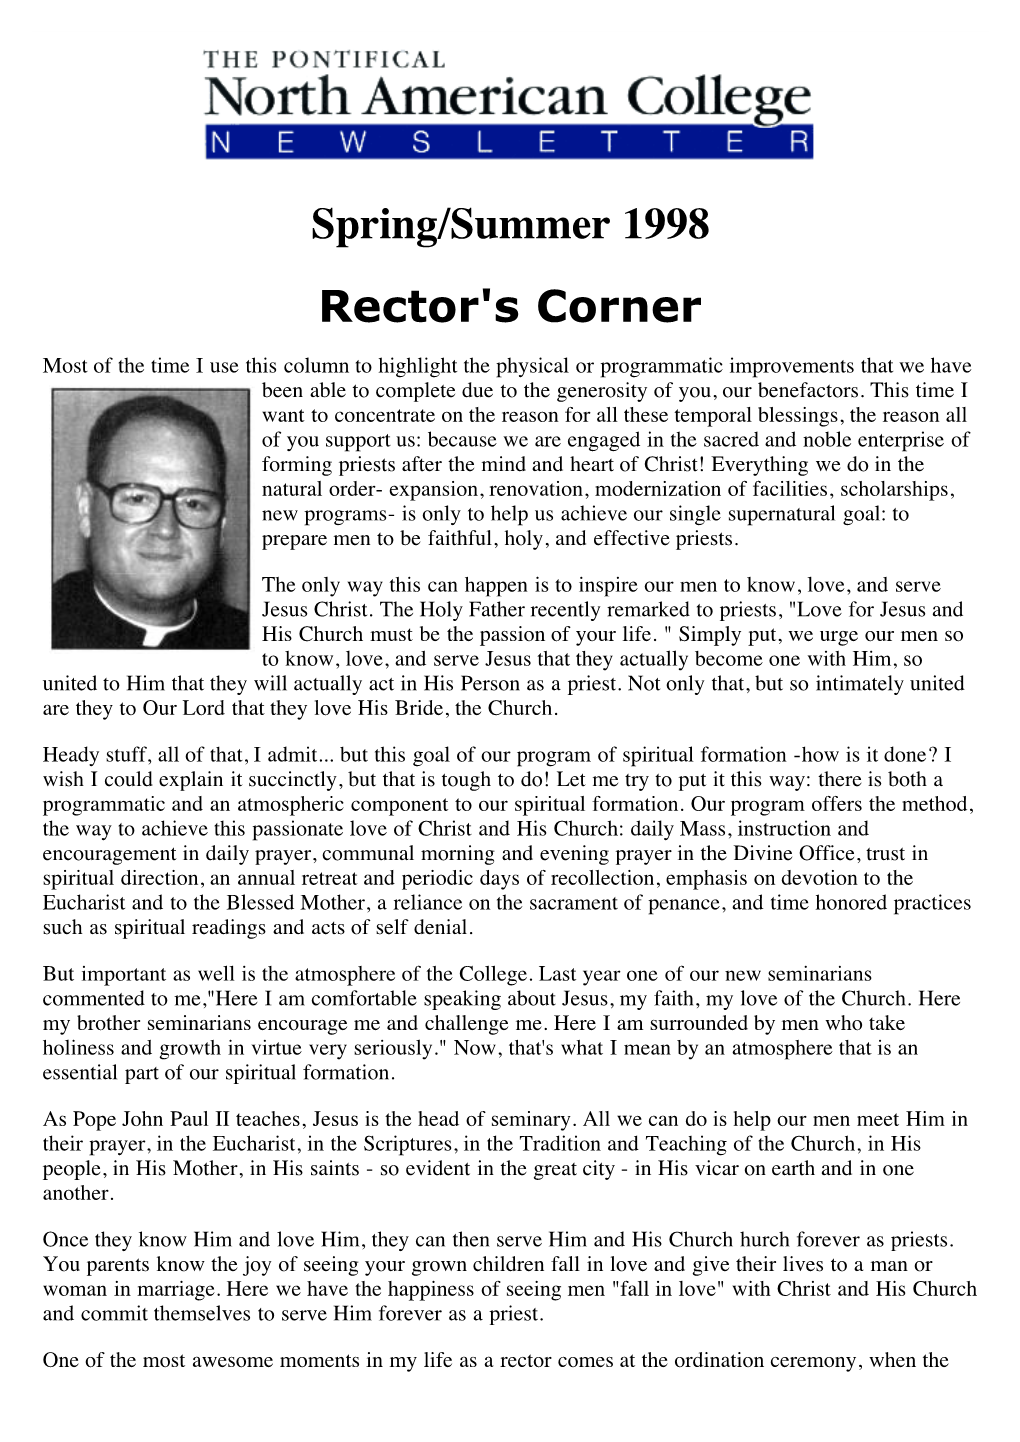 Spring/Summer 1998 Rector's Corner